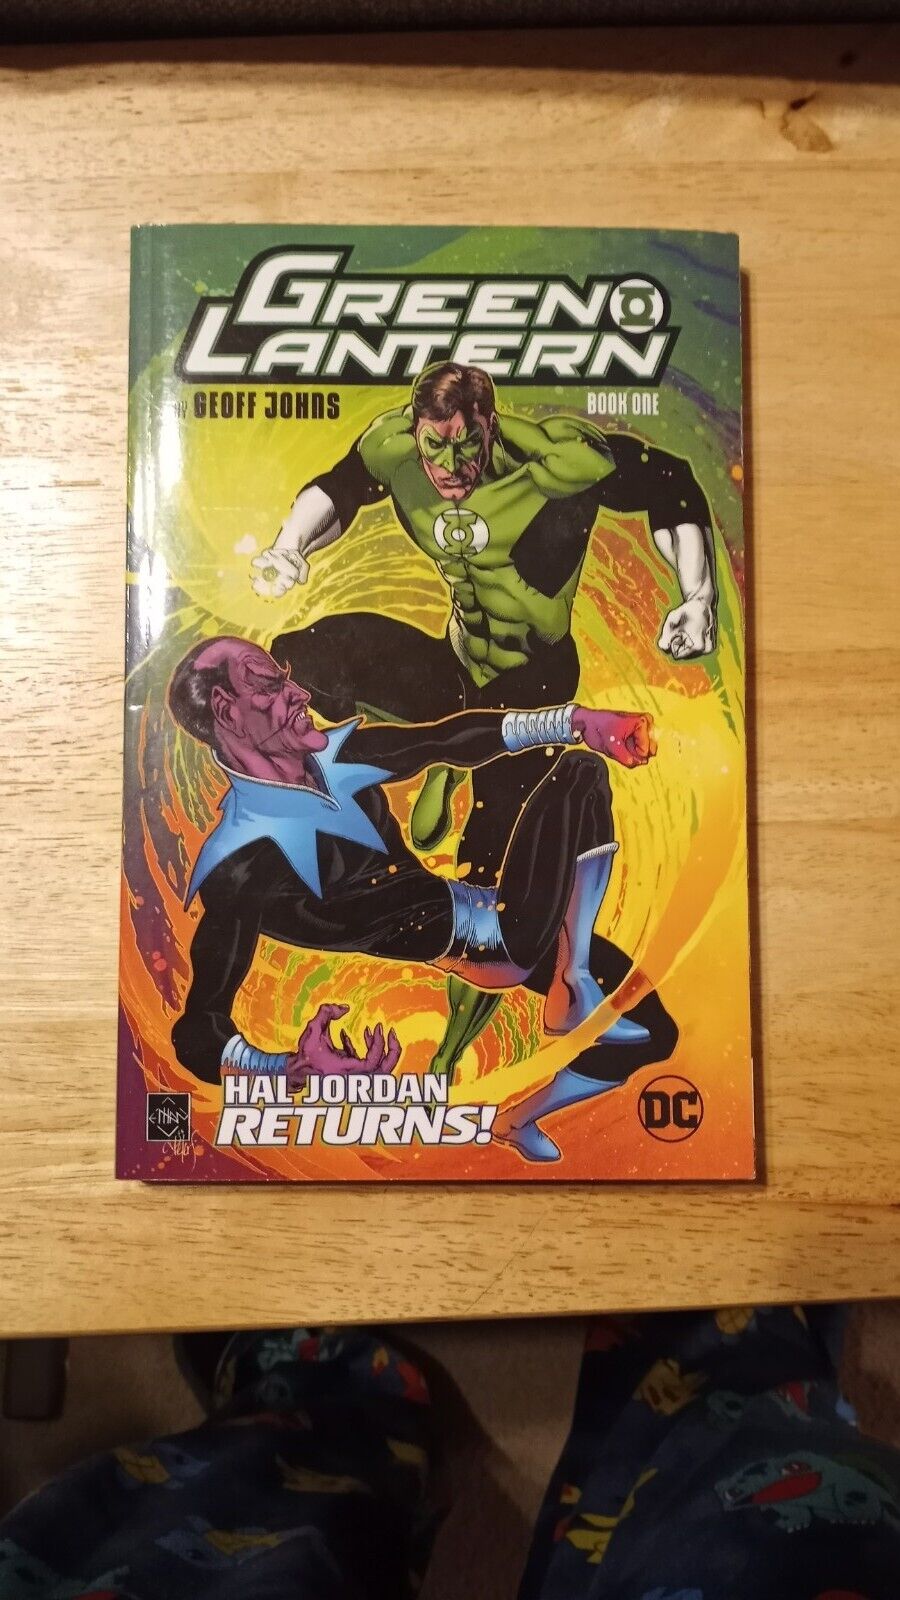 Green Lantern by Geoff Johns Book One (DC Comics, April 2019)